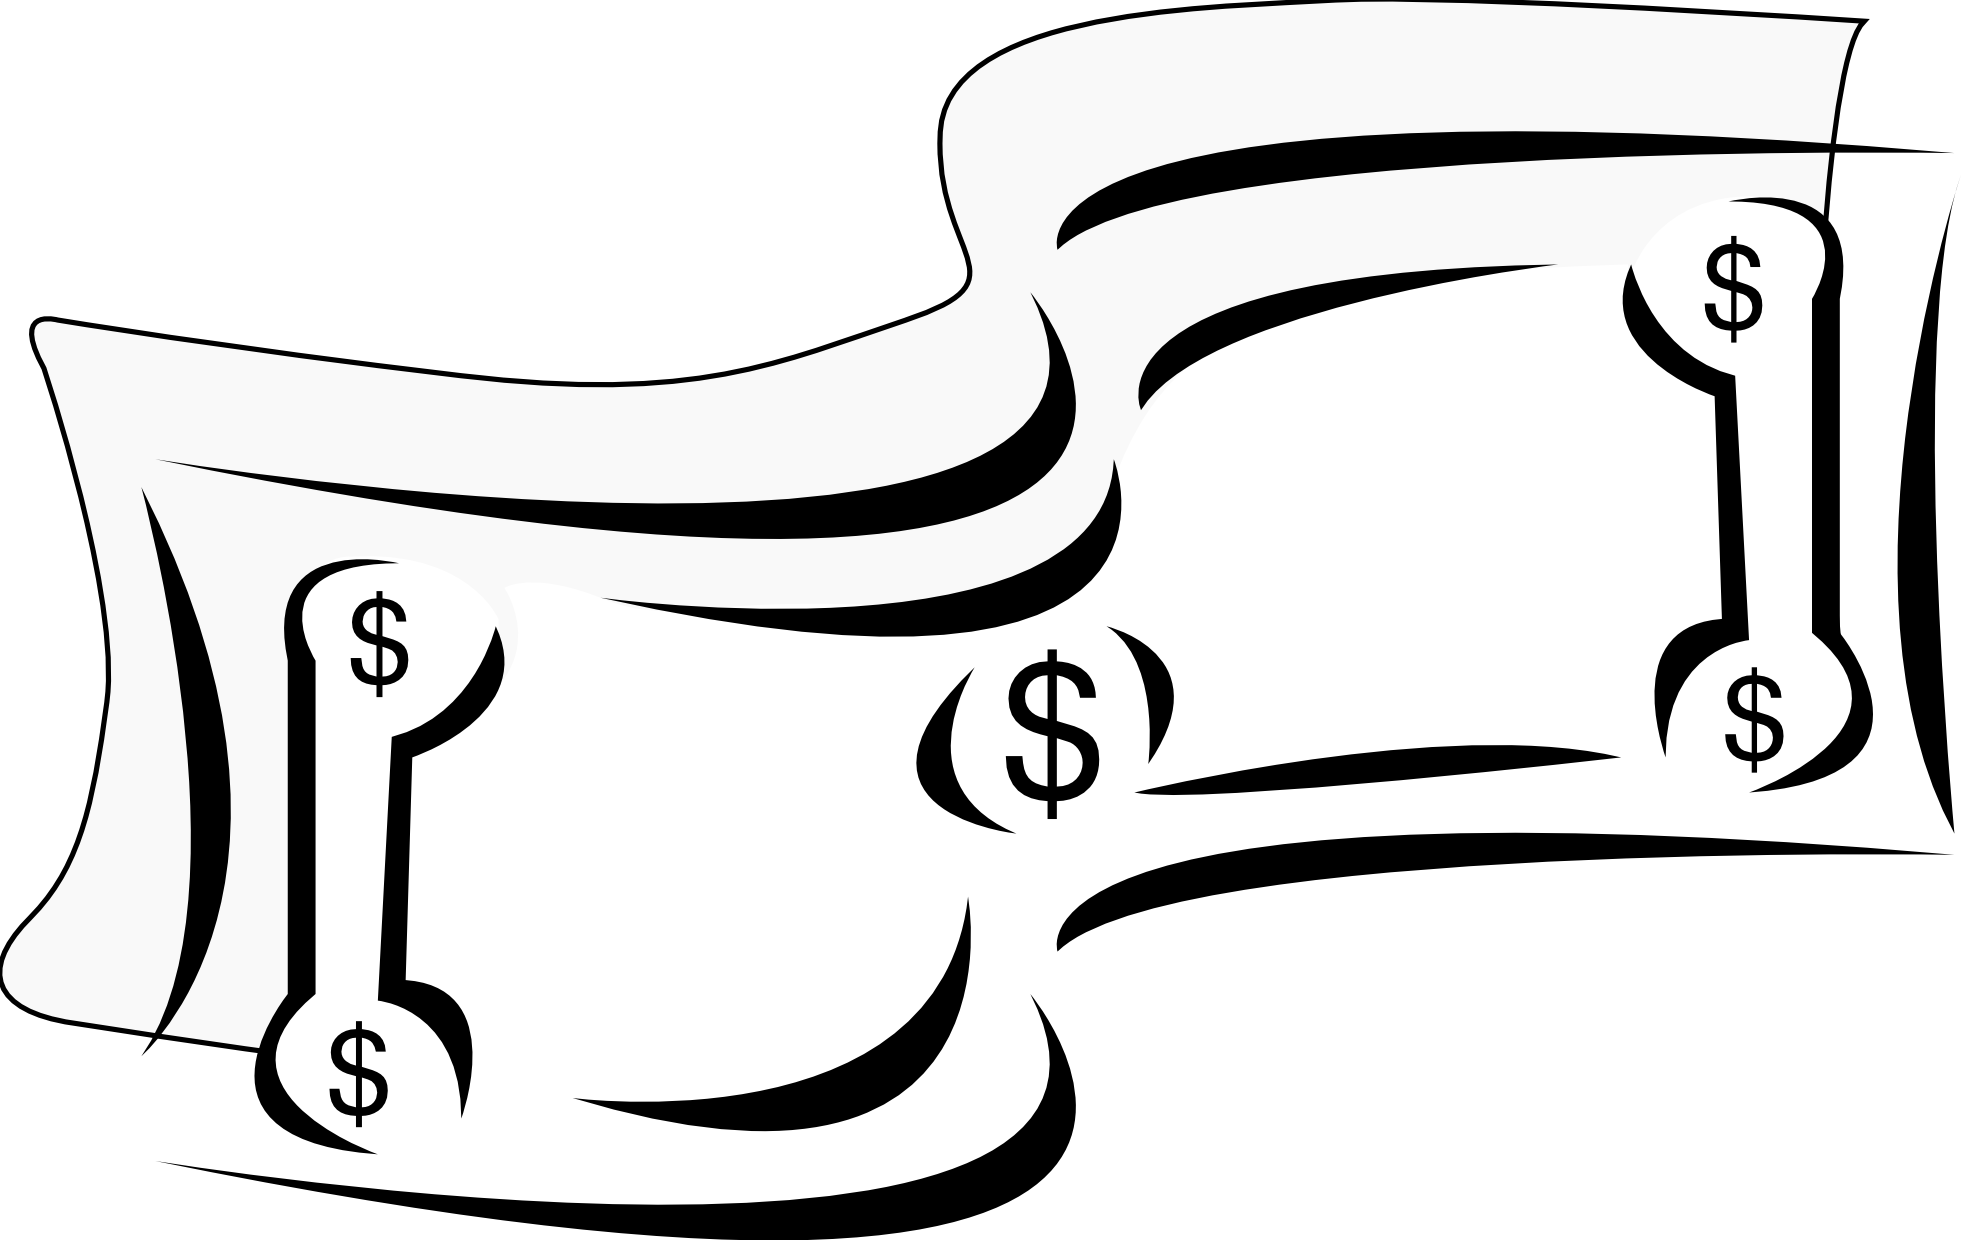 Dollar bill clip art black and white clipart jpg